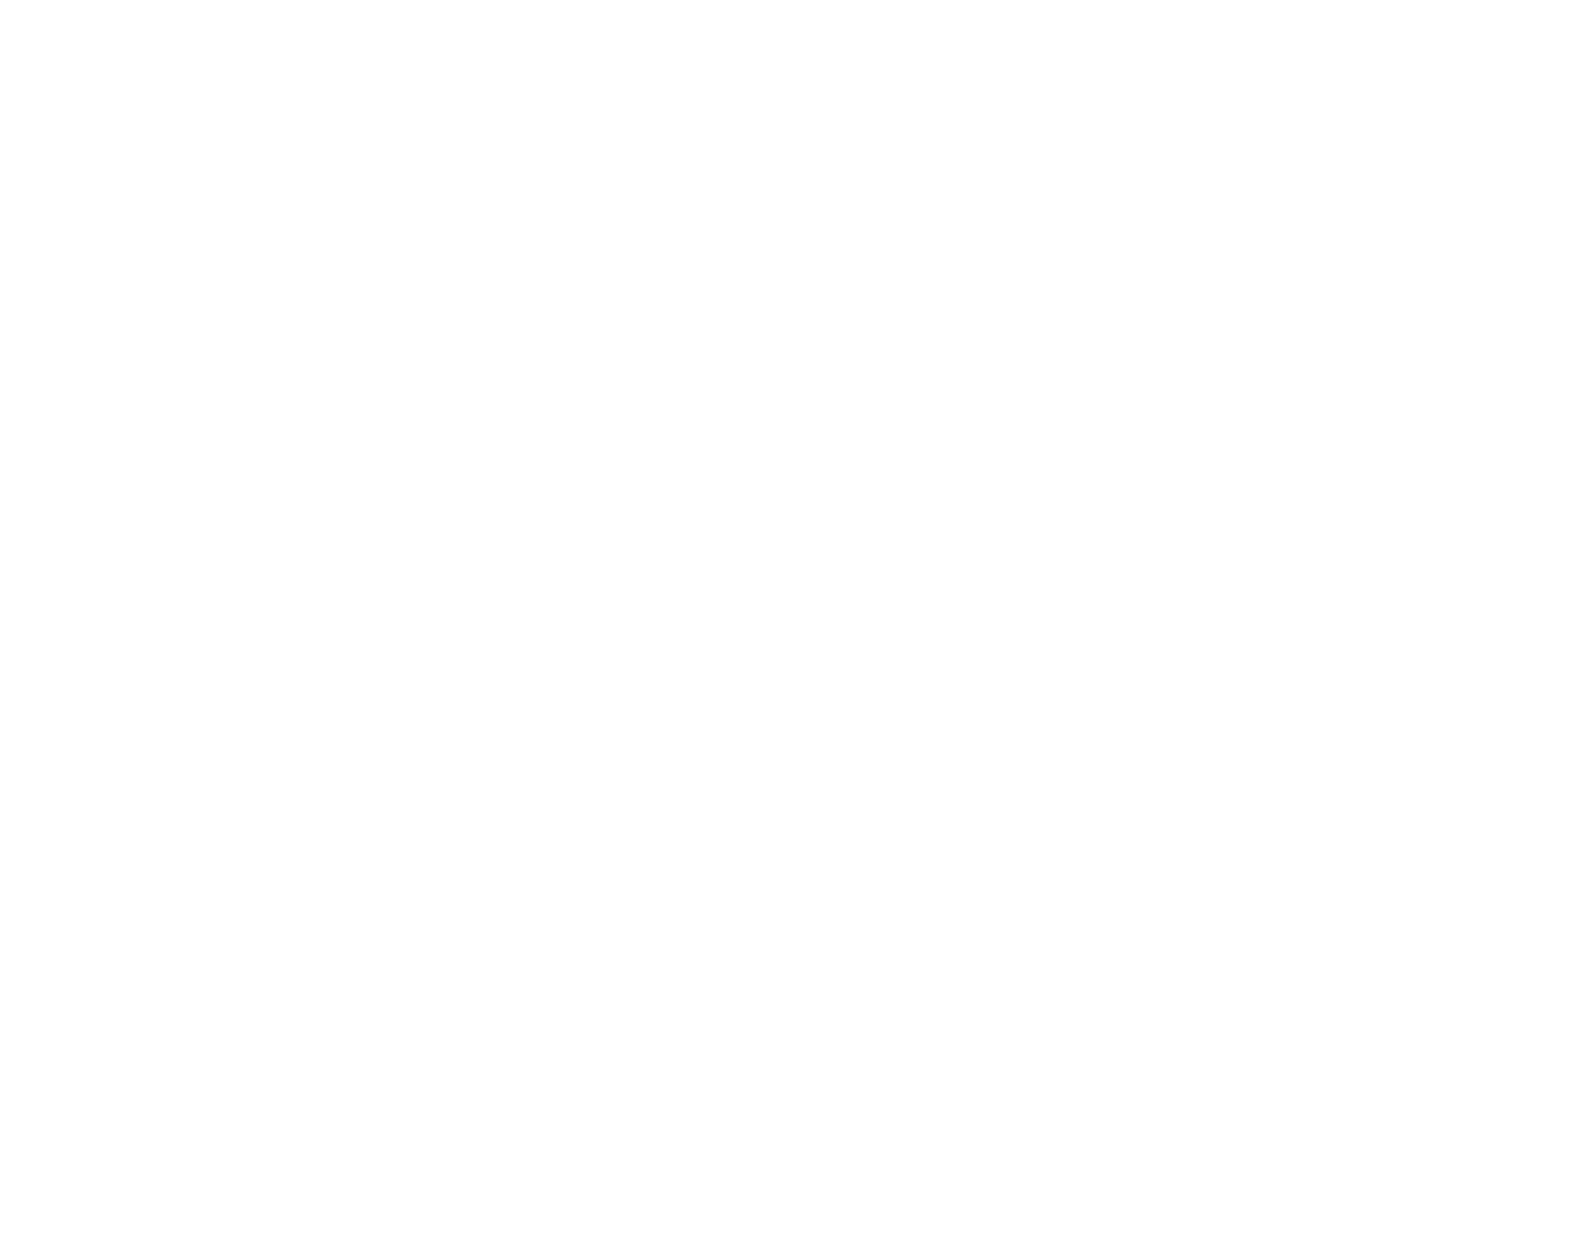 Bank of Ireland Group Logo groß für dunkle Hintergründe (transparentes PNG)